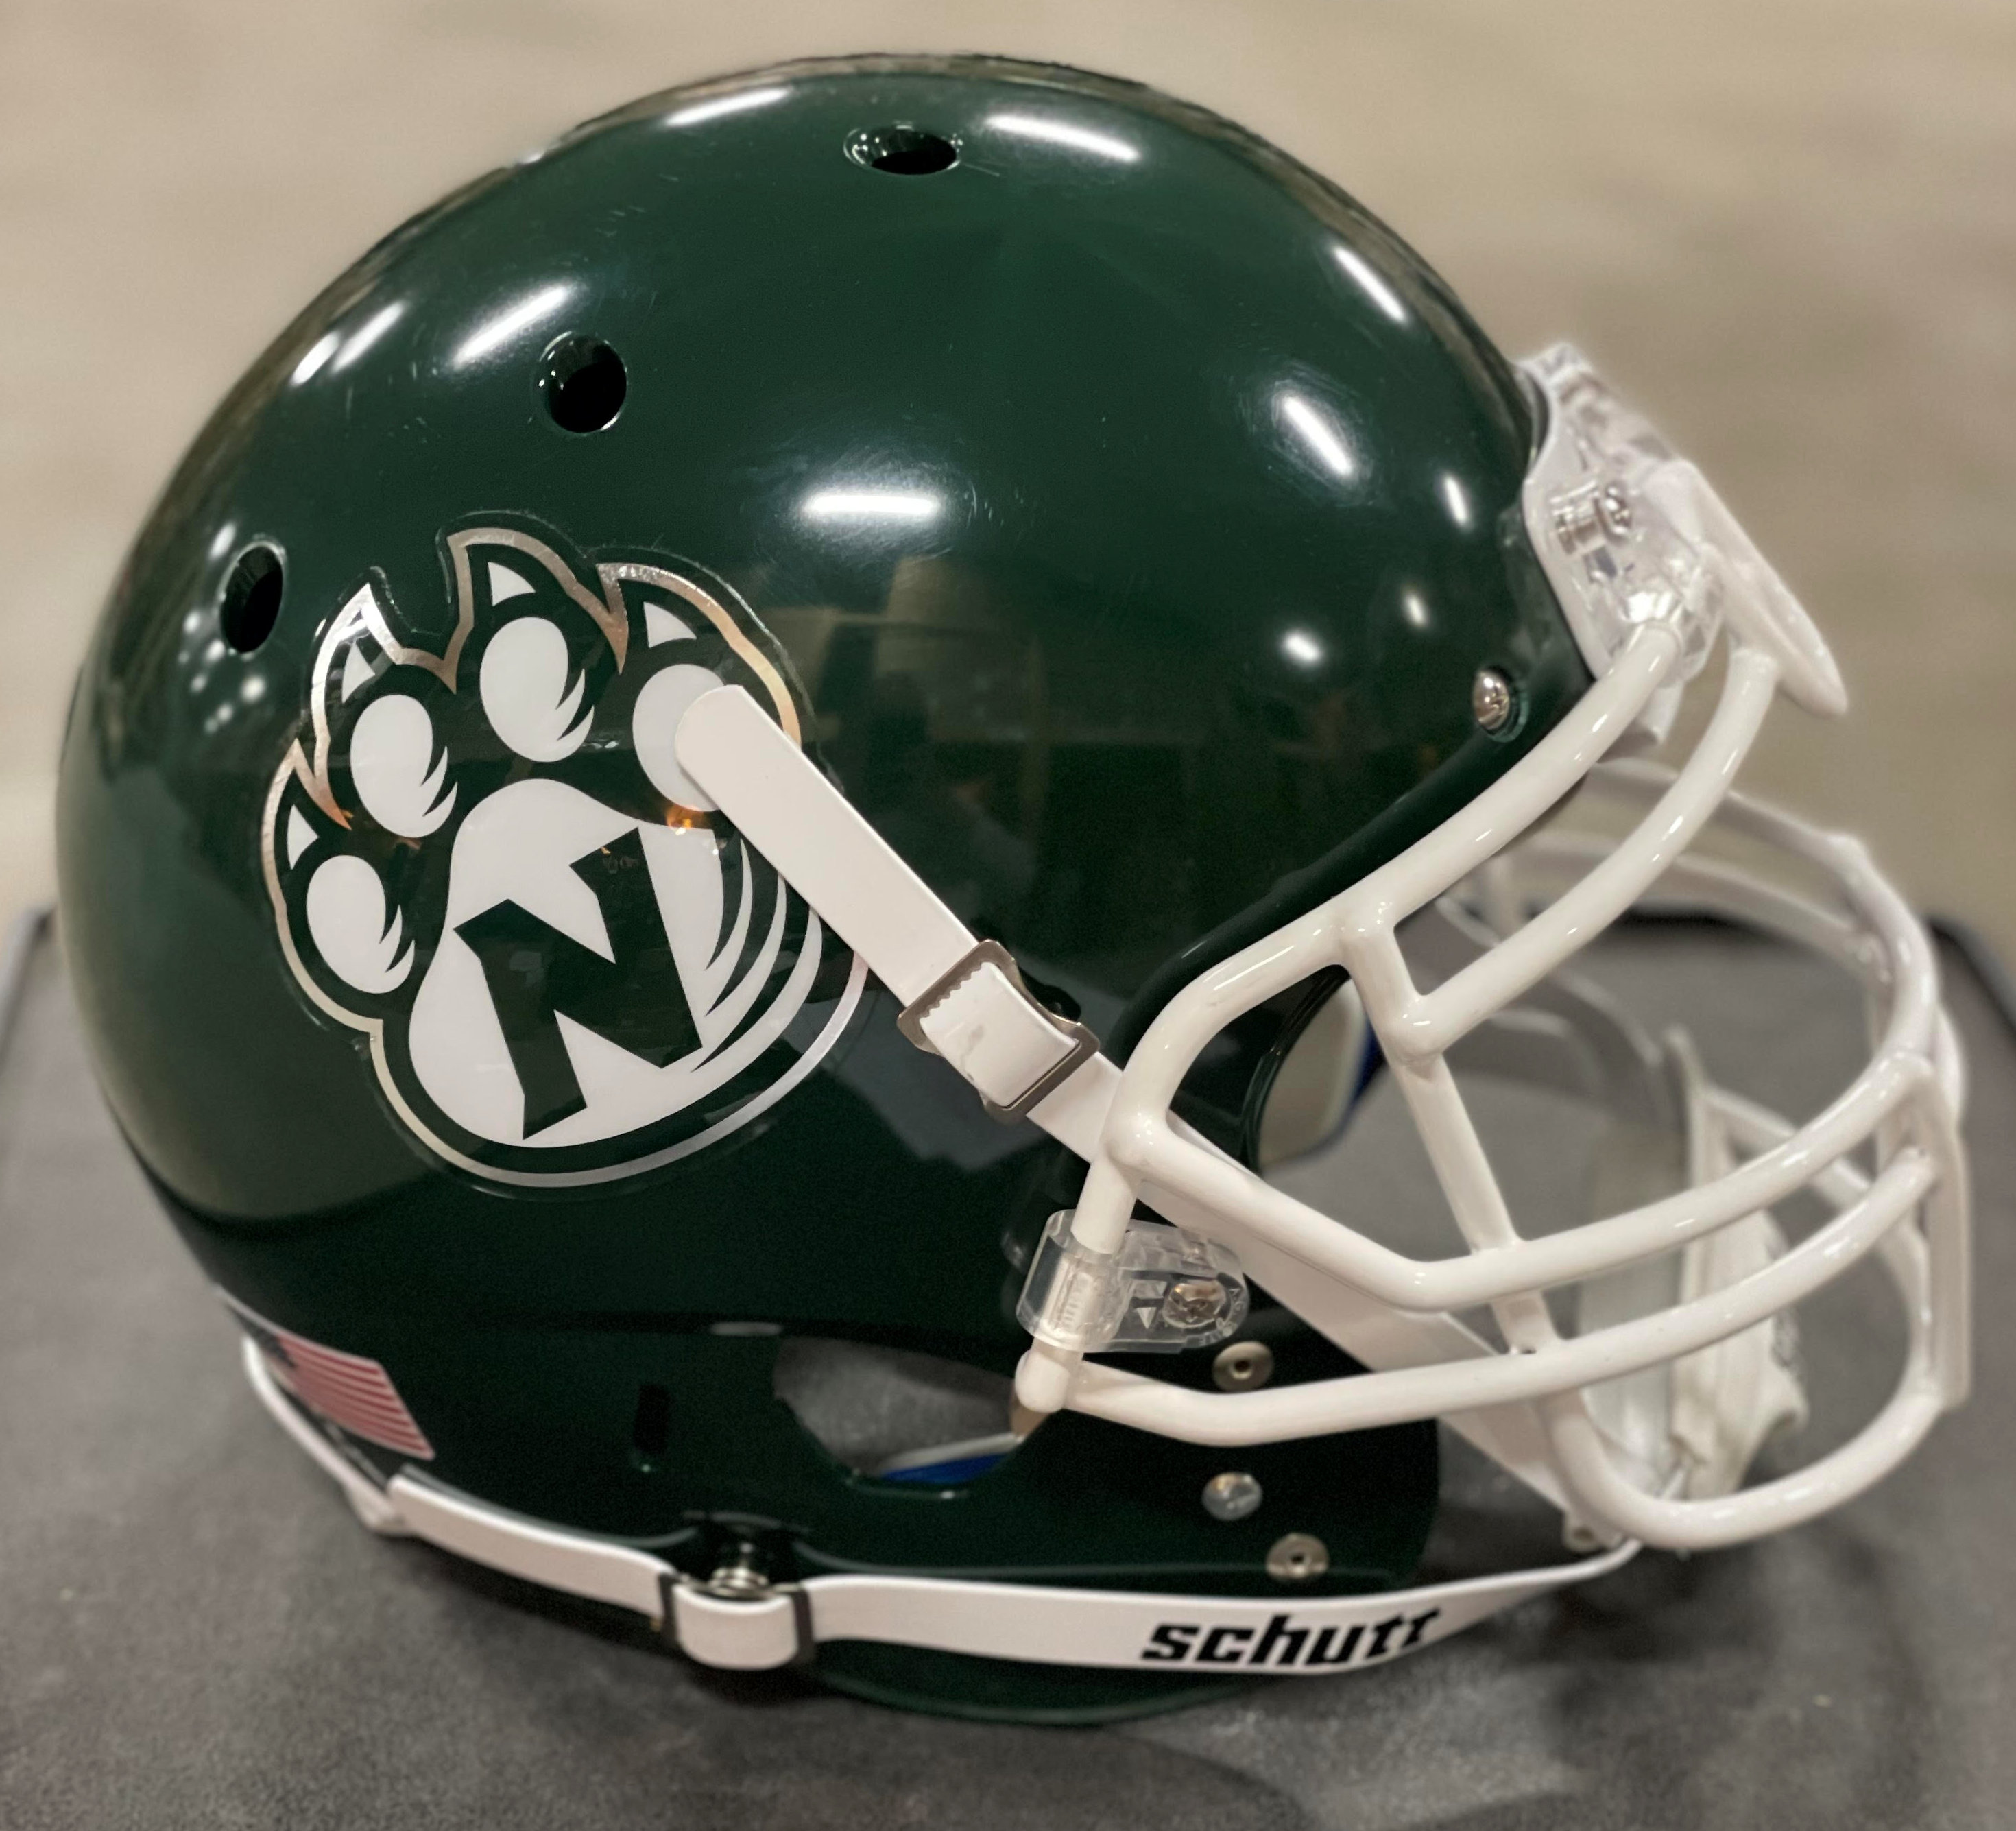 Northwest Missouri State Bearcats Authentic College XP Football Helmet Schutt <B>Green with Chrome Decal</B>